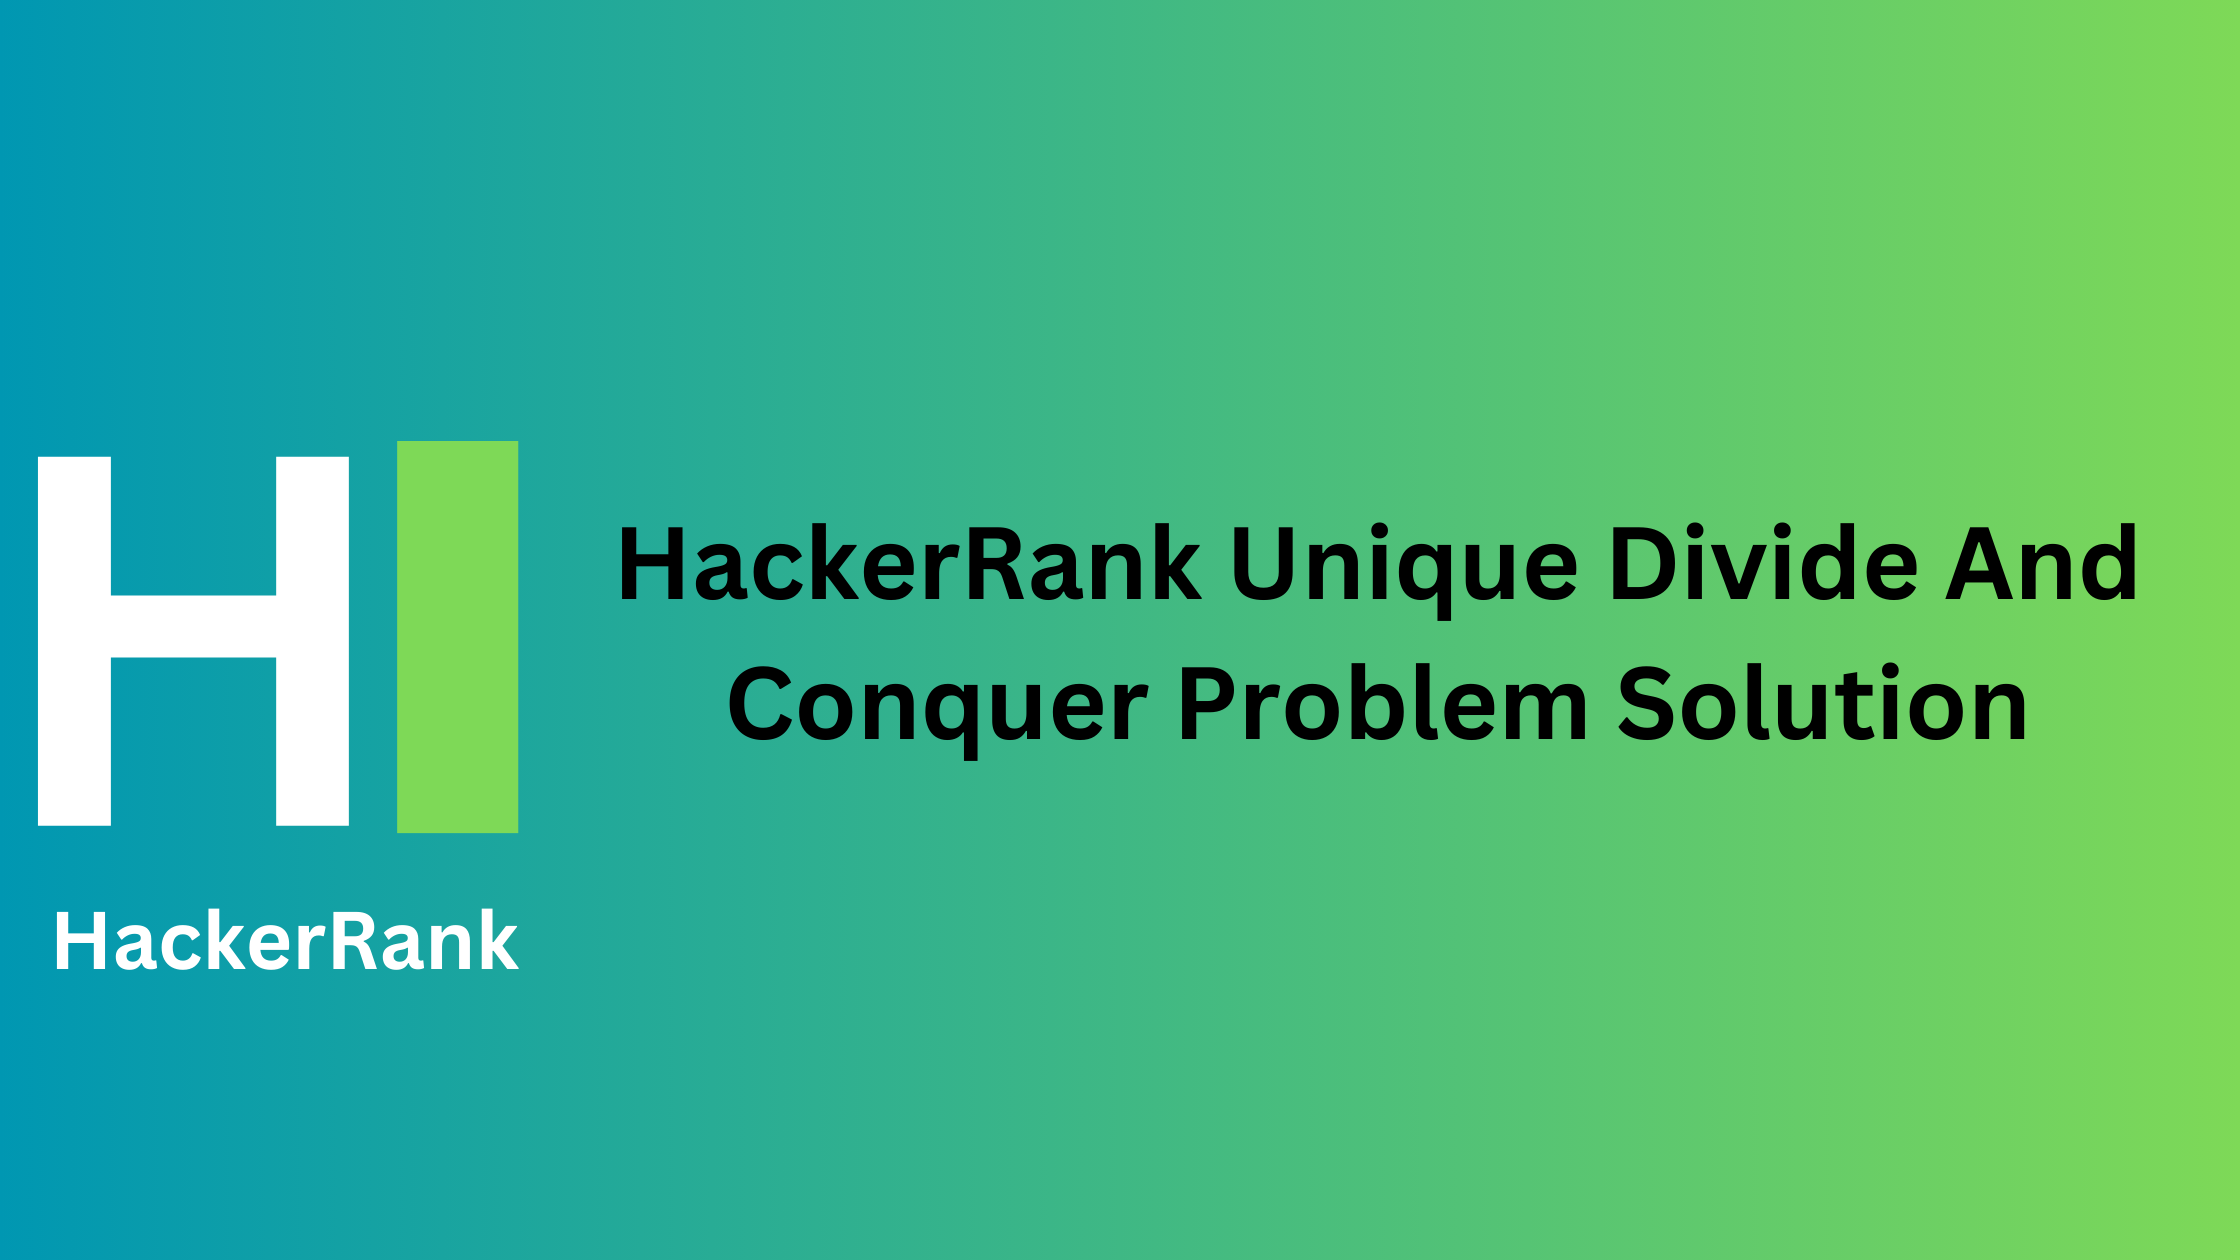 HackerRank Unique Divide And Conquer Problem Solution